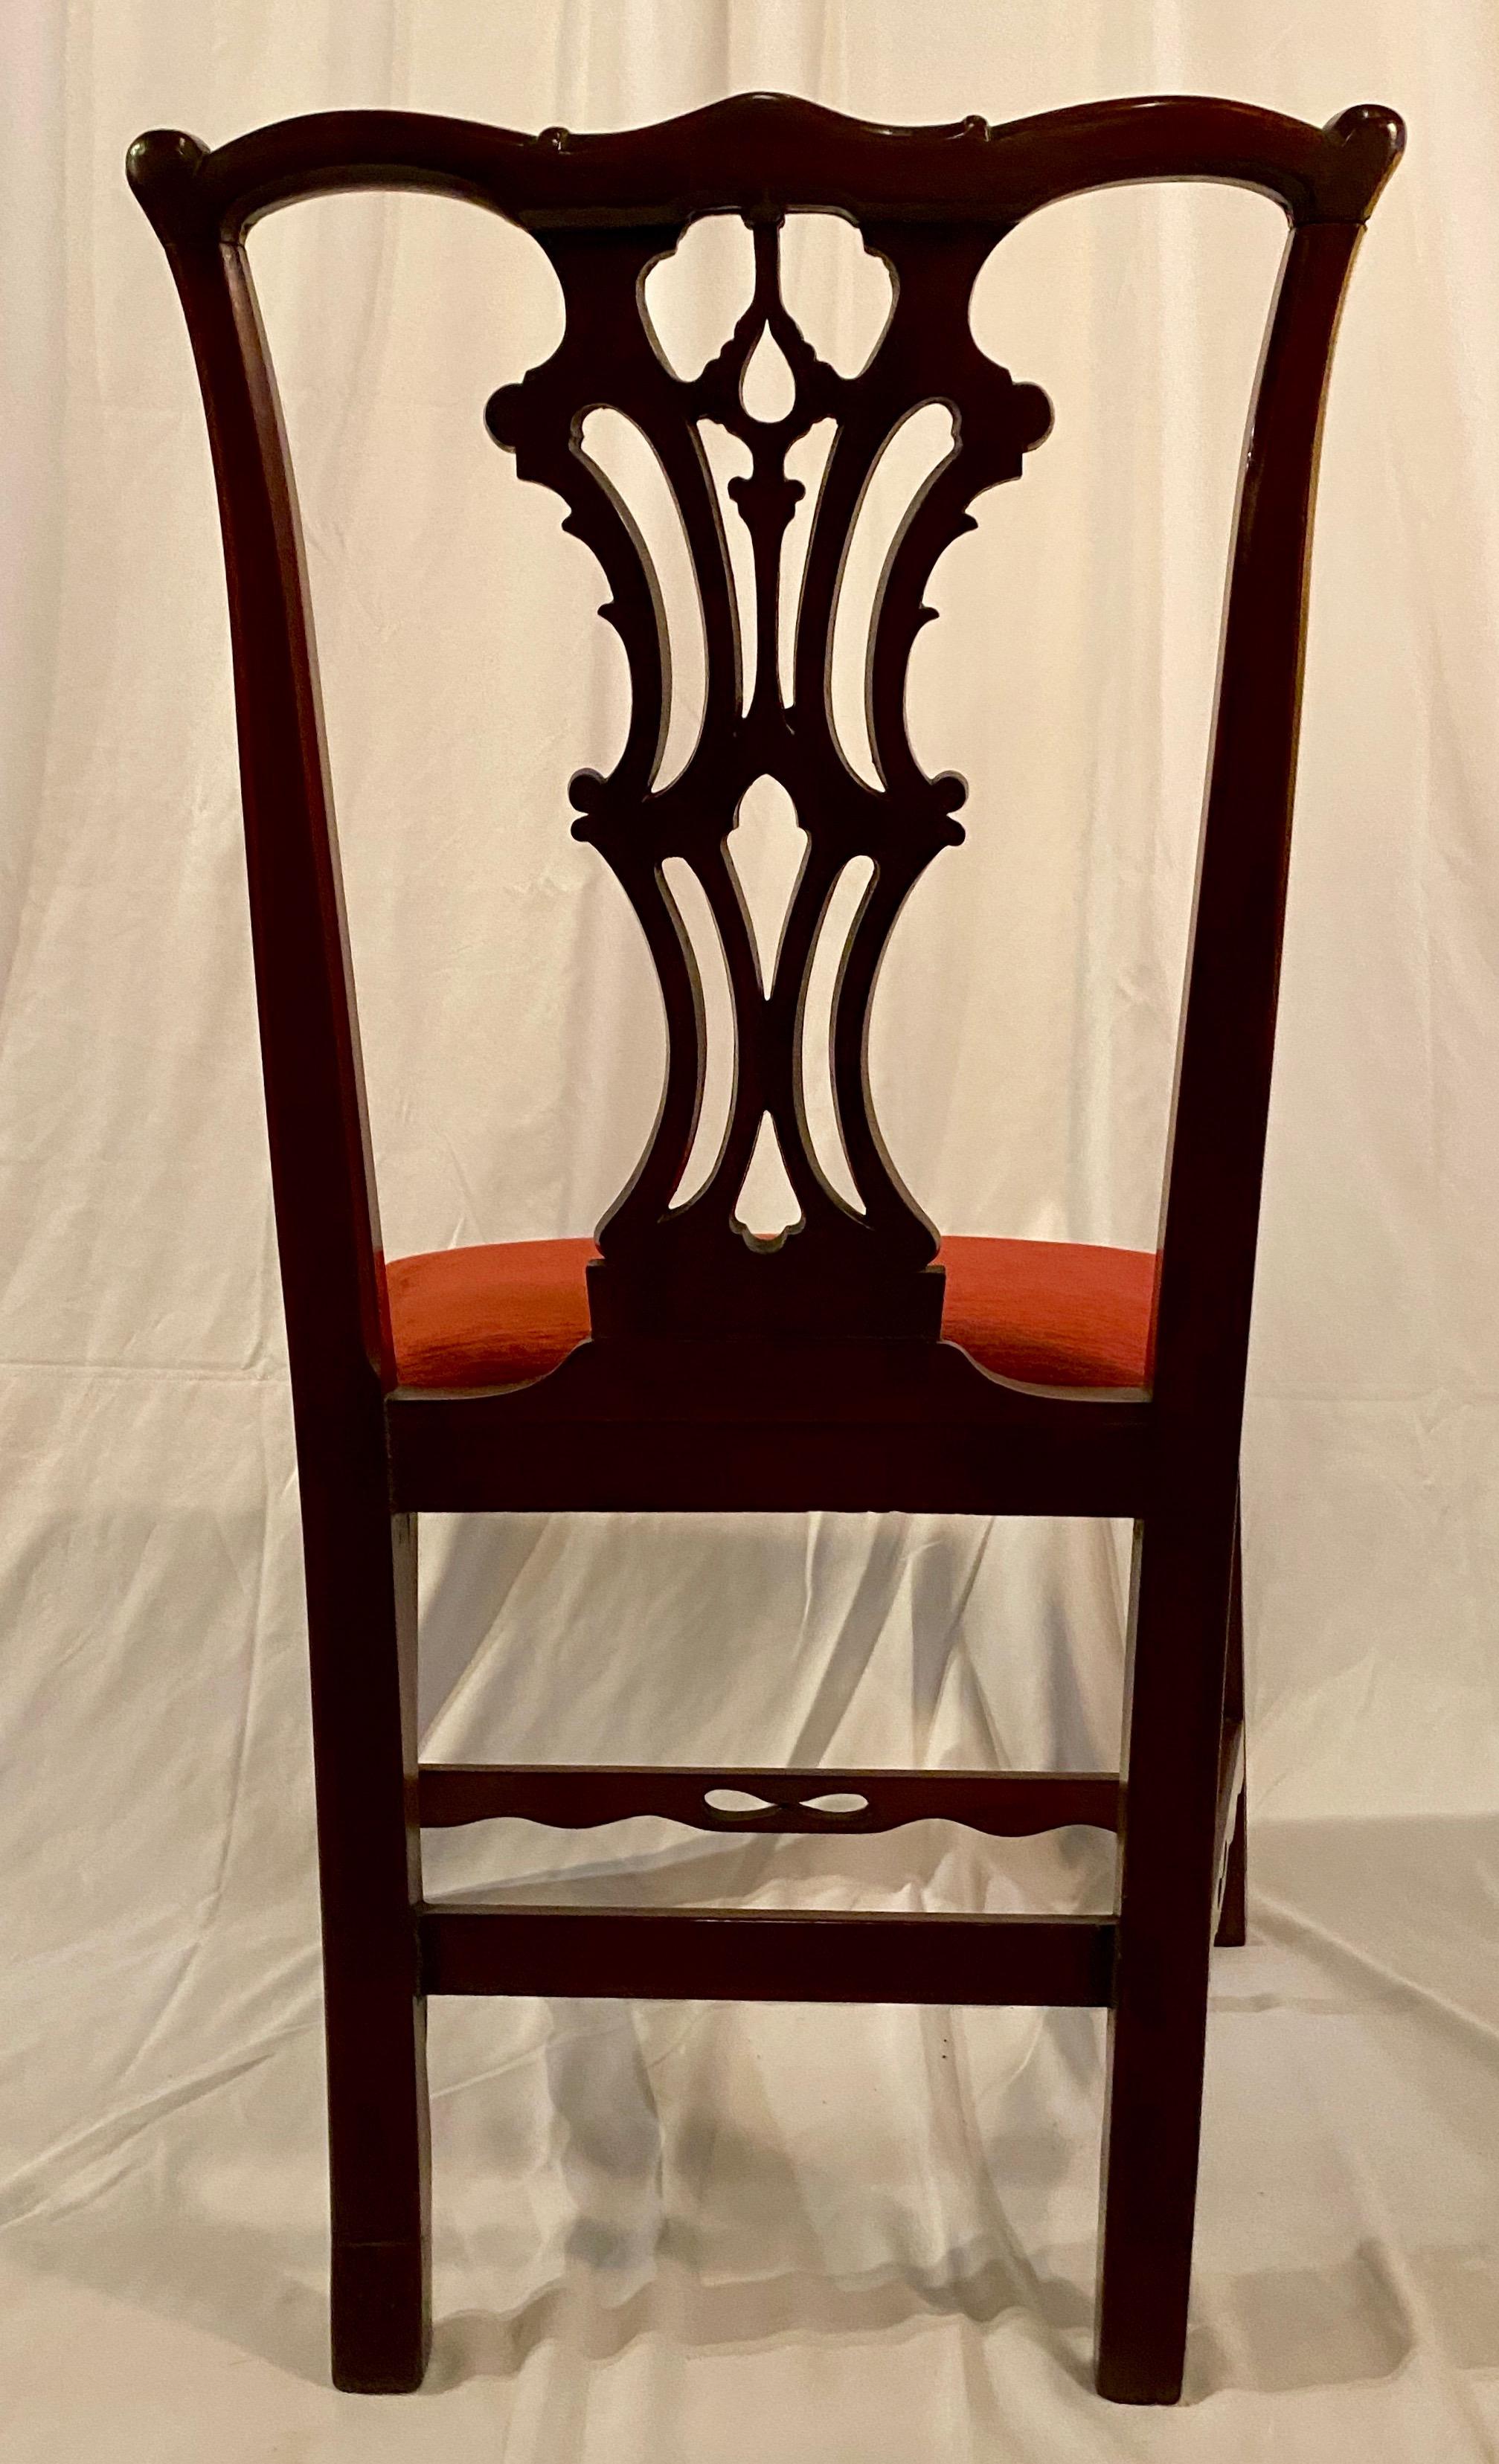 Antique English mahogany chair Fretwork design Chippendale, circa 1870-1880
